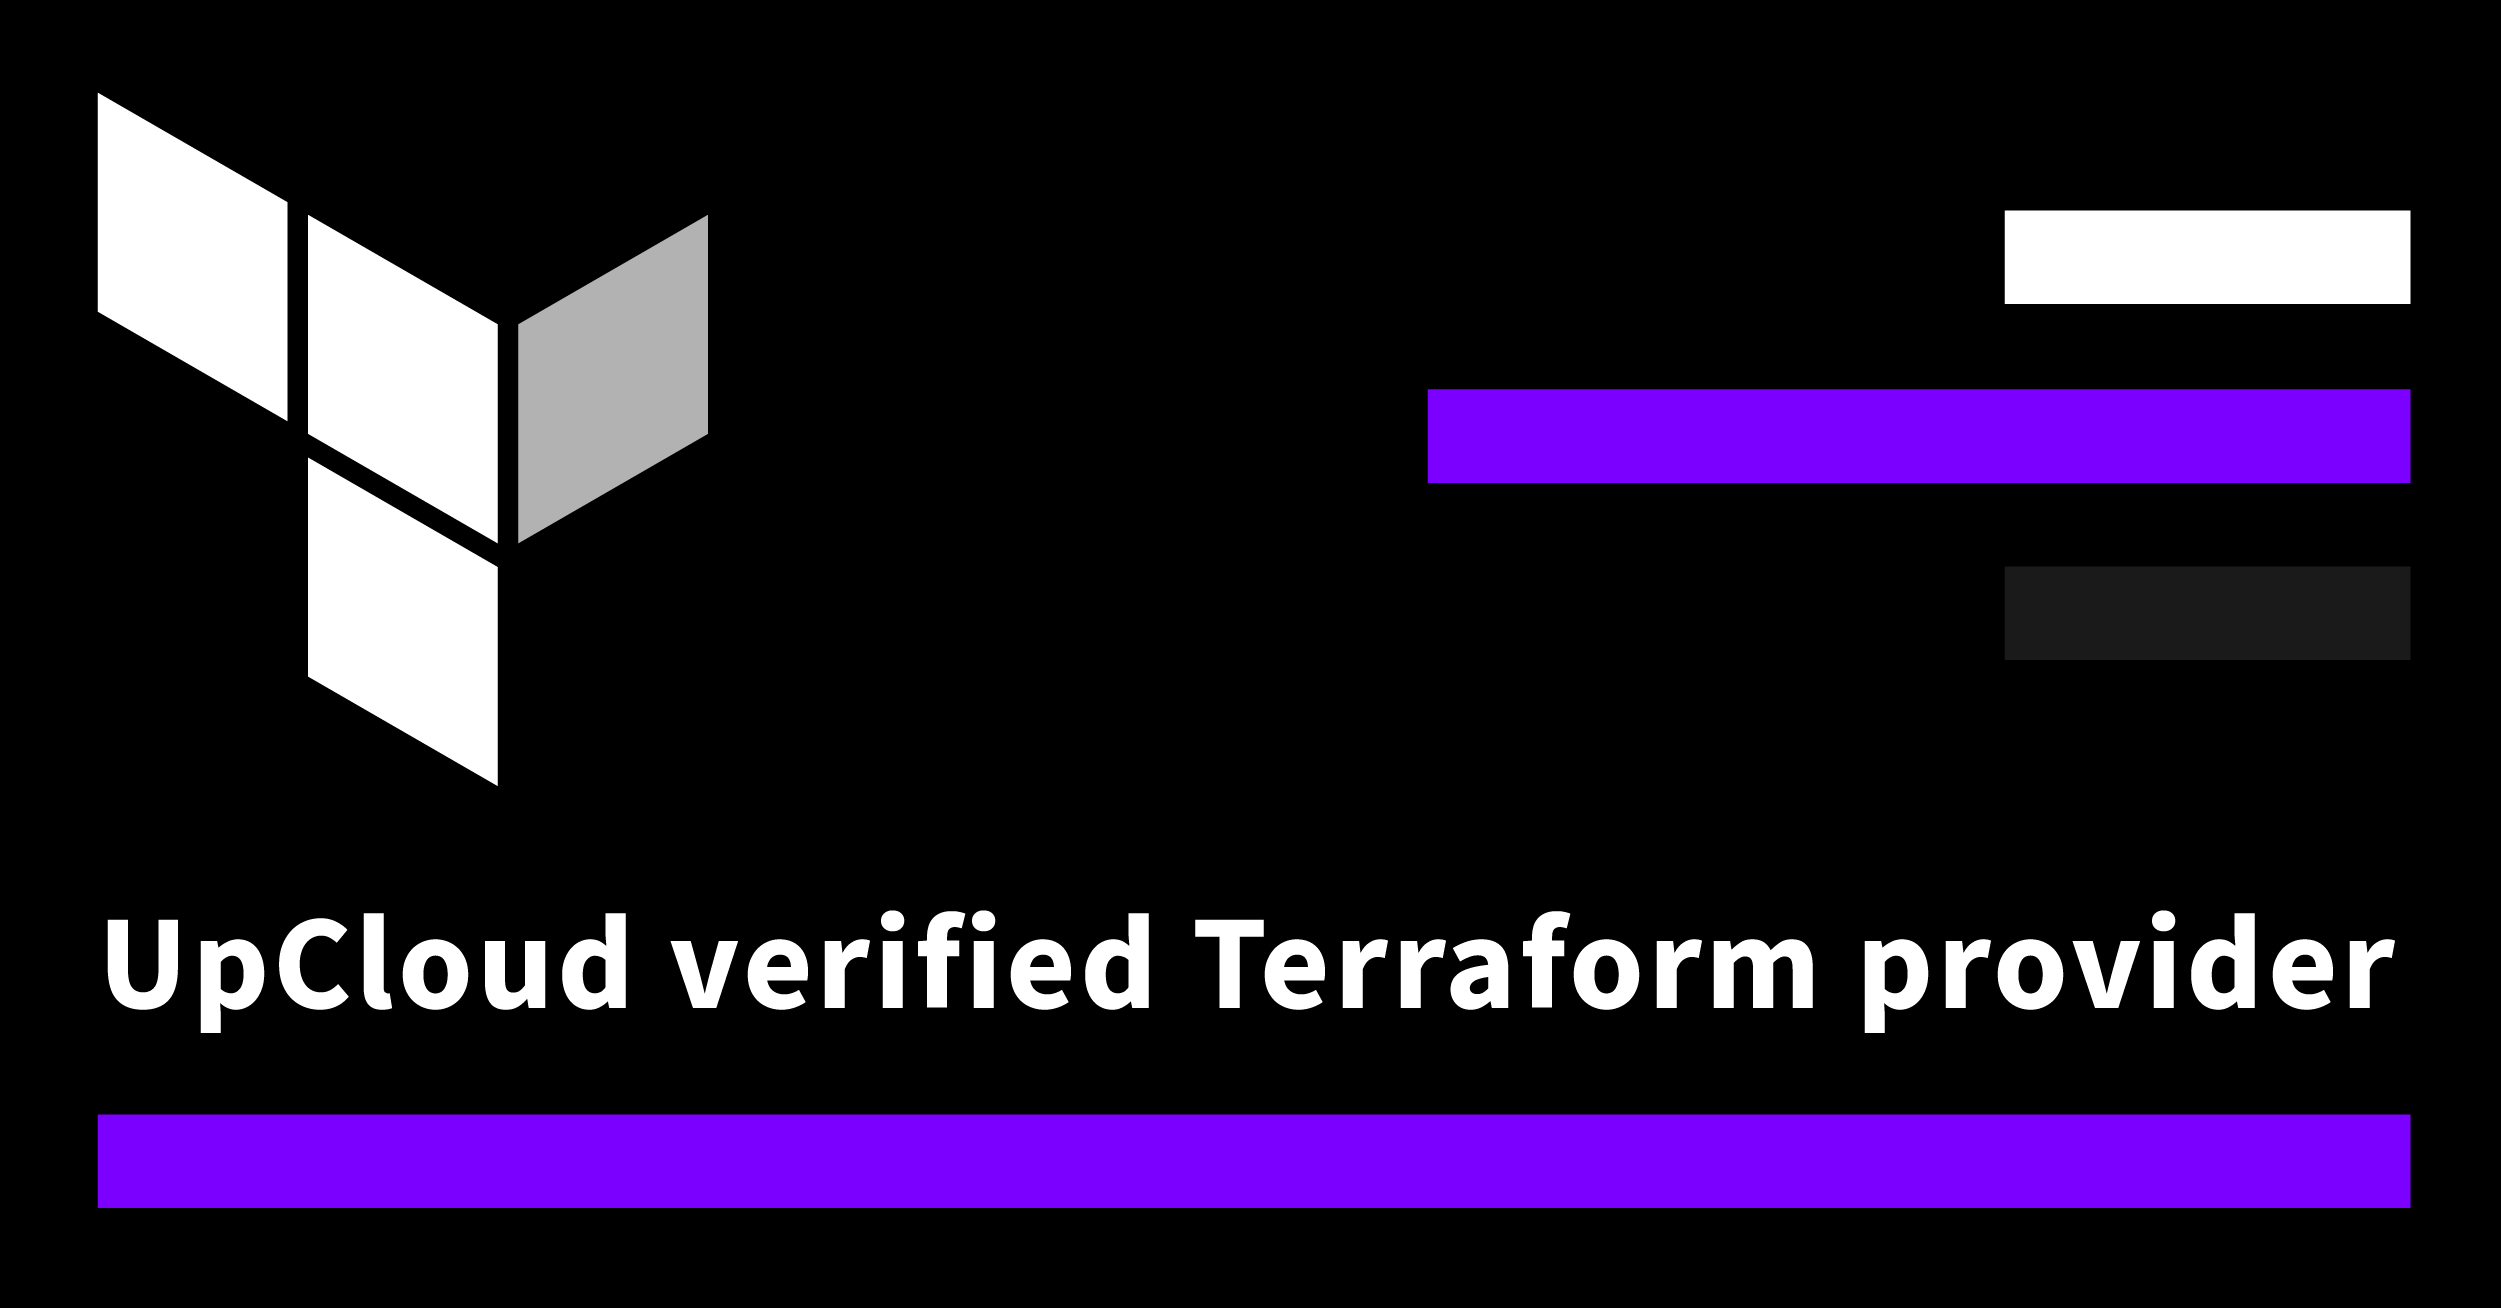 UpCloud verified Terraform provider